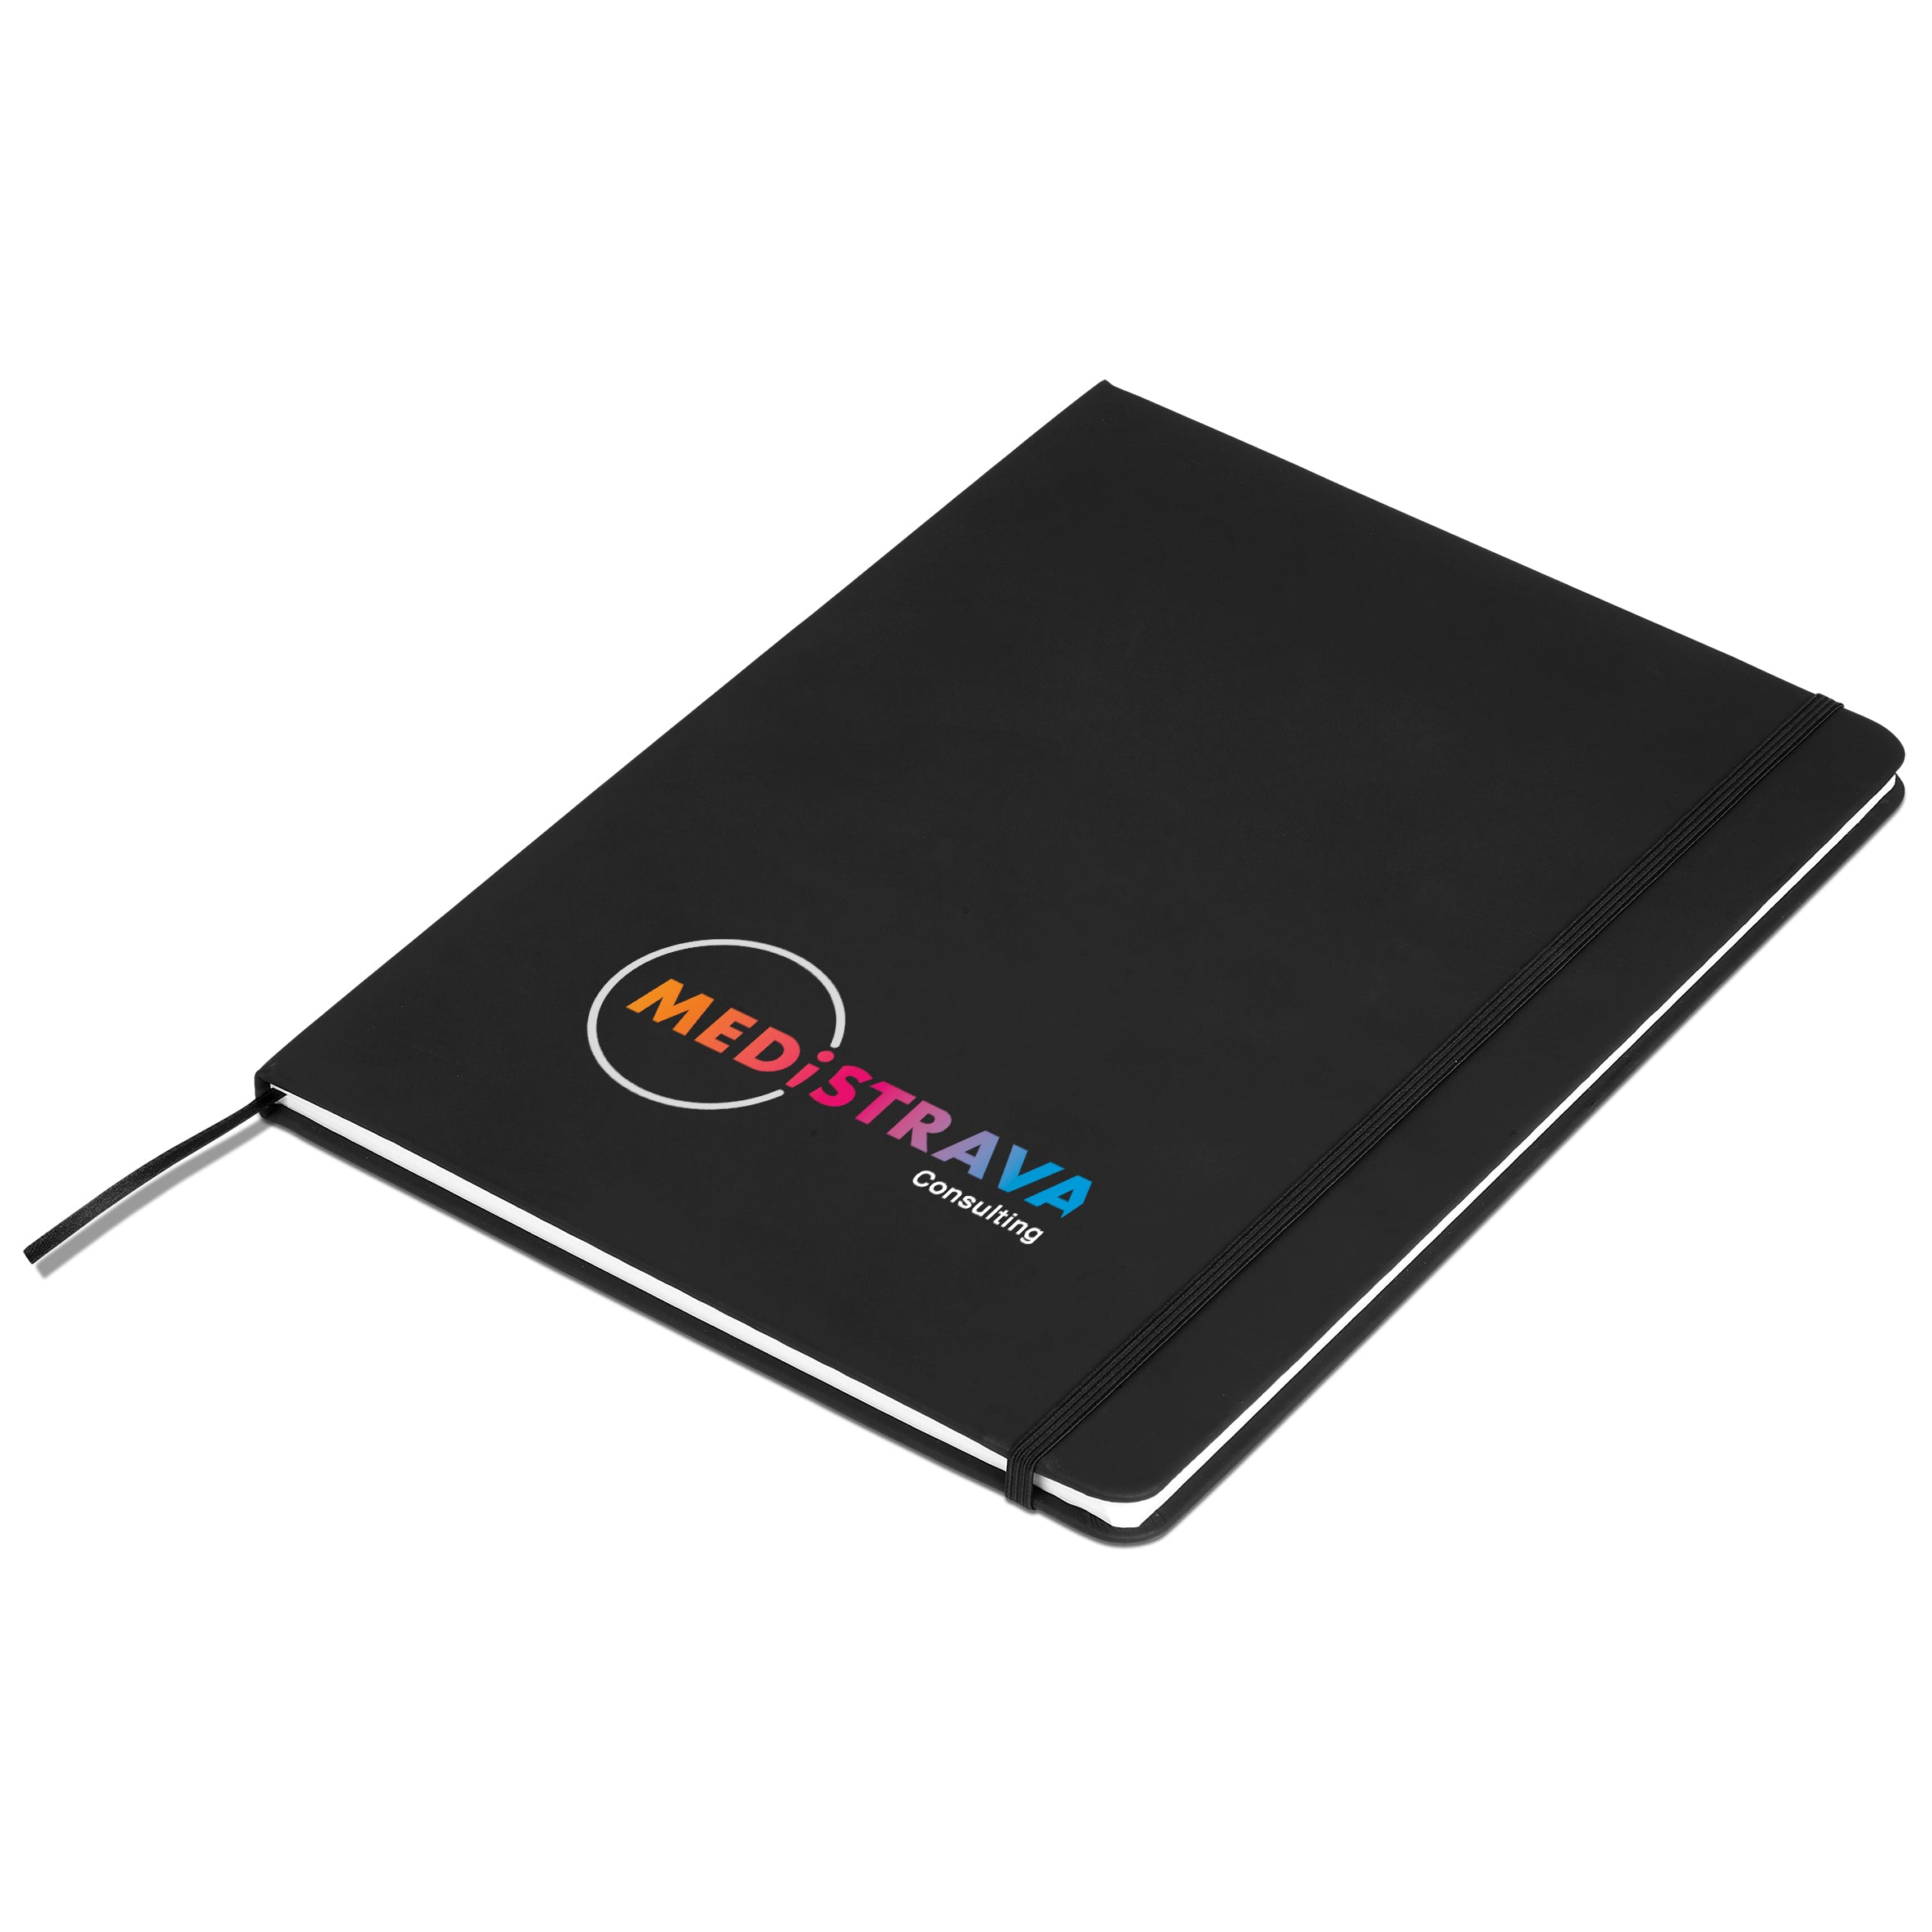 Omega A4 Hard Cover Notebook Black / BL